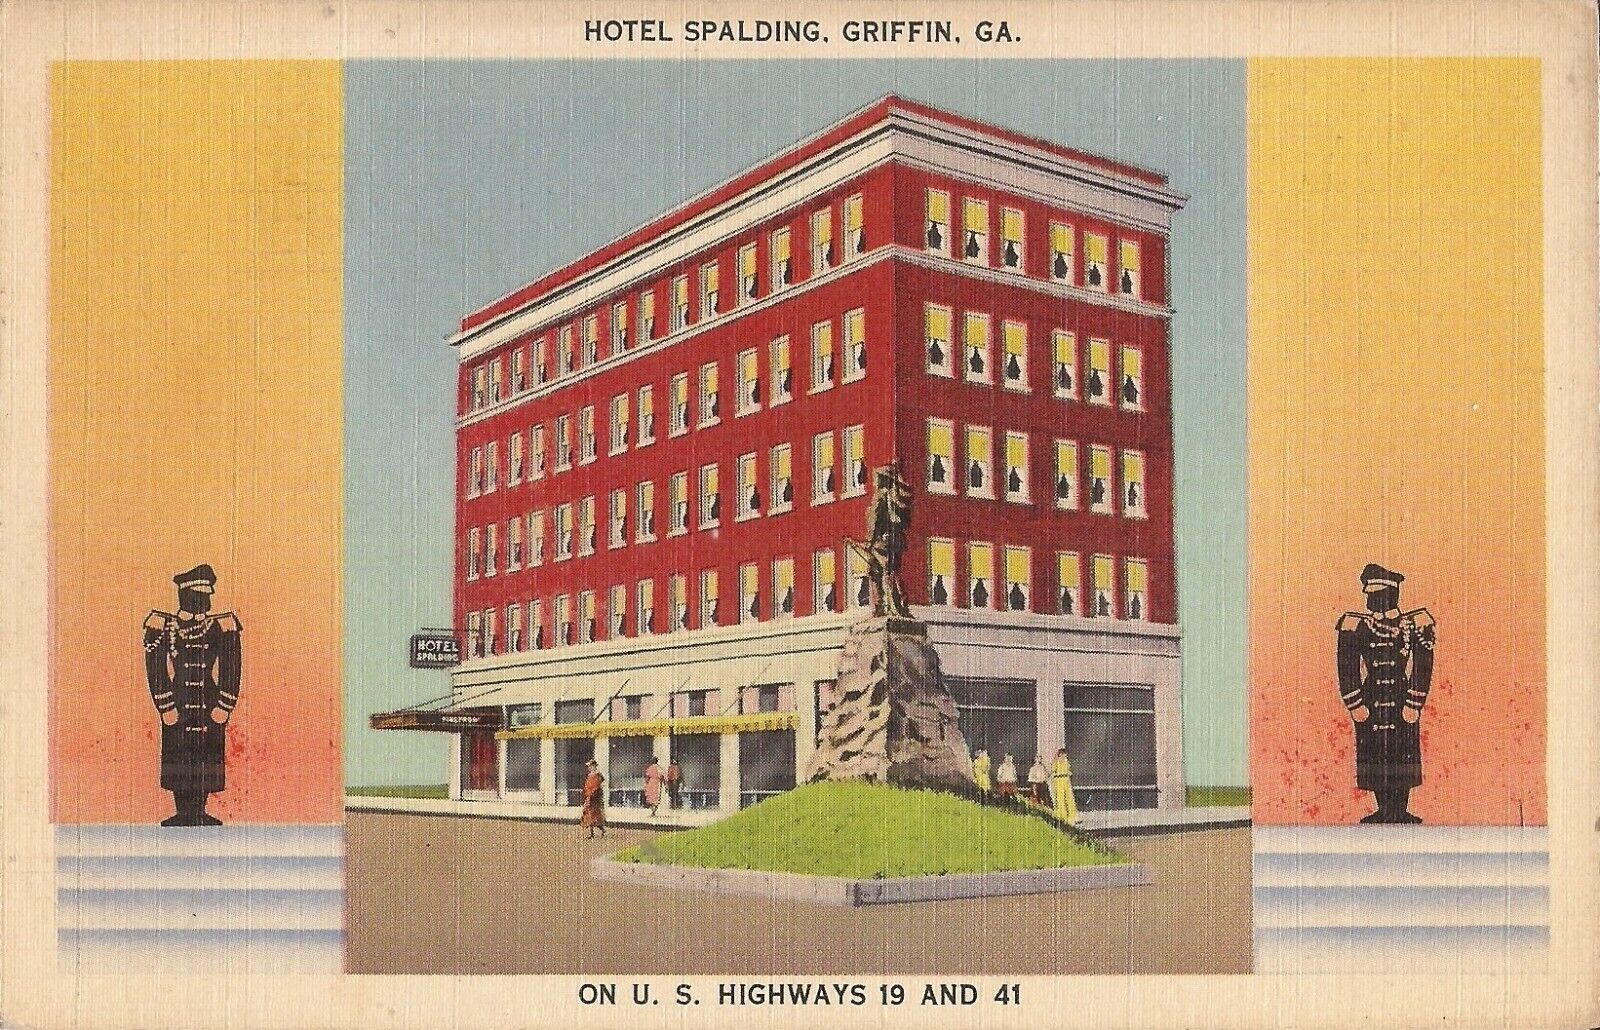 Griffin, GEORGIA - Hotel Spalding - 1942 - ROADSIDE ADVERTISING